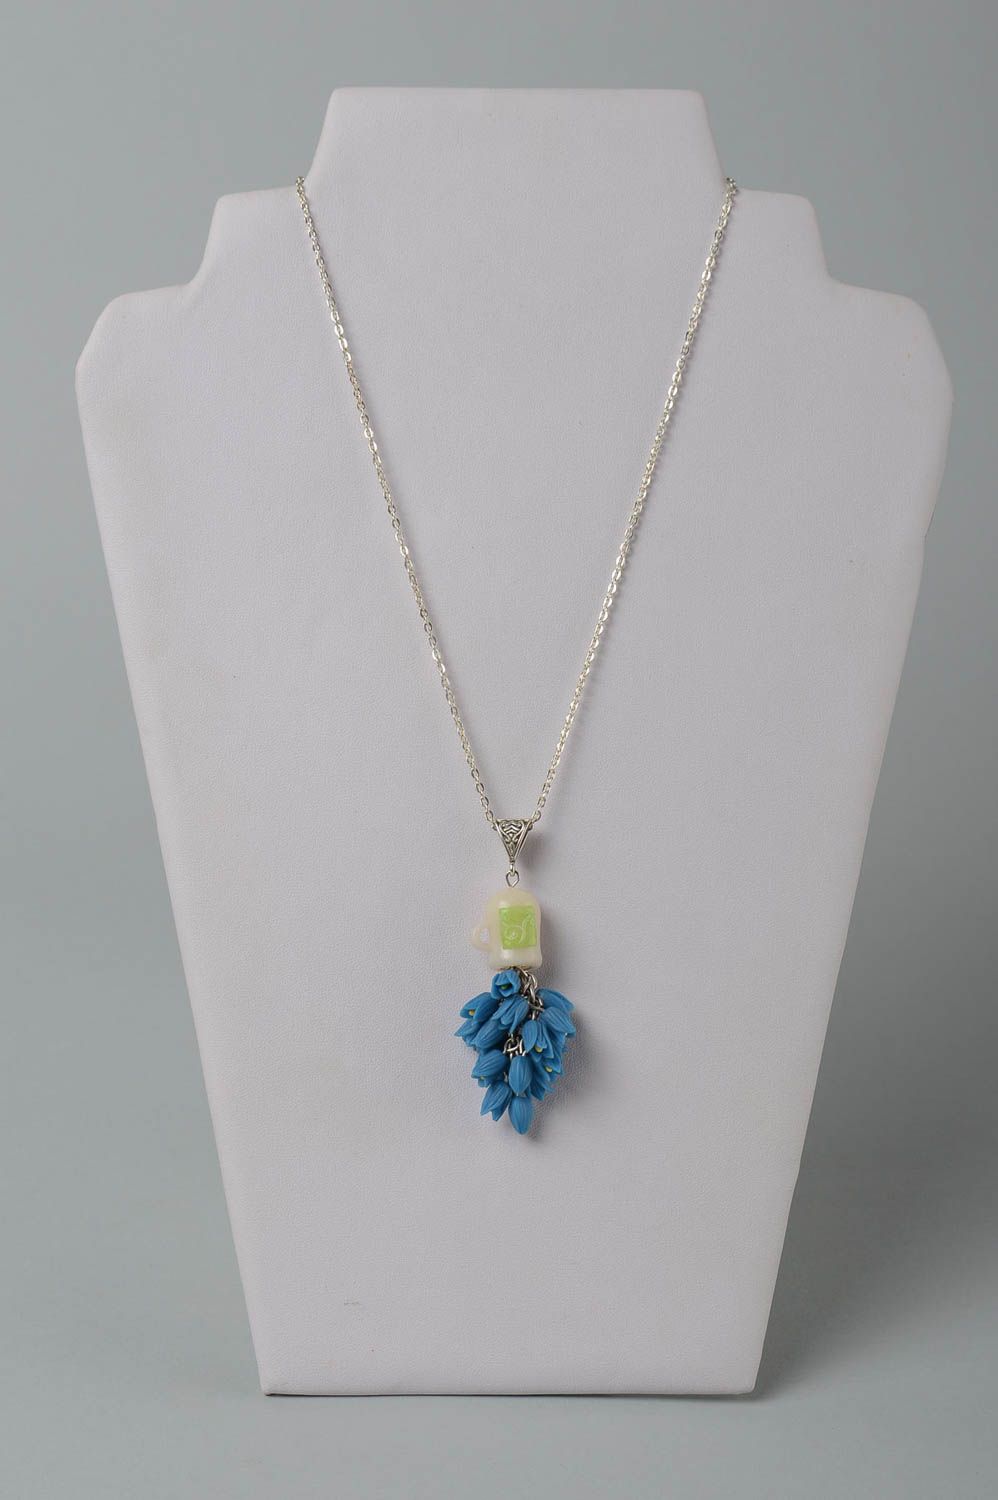 Flower pendant handmade jewelry polymer clay pendant plastic jewelry for women photo 1